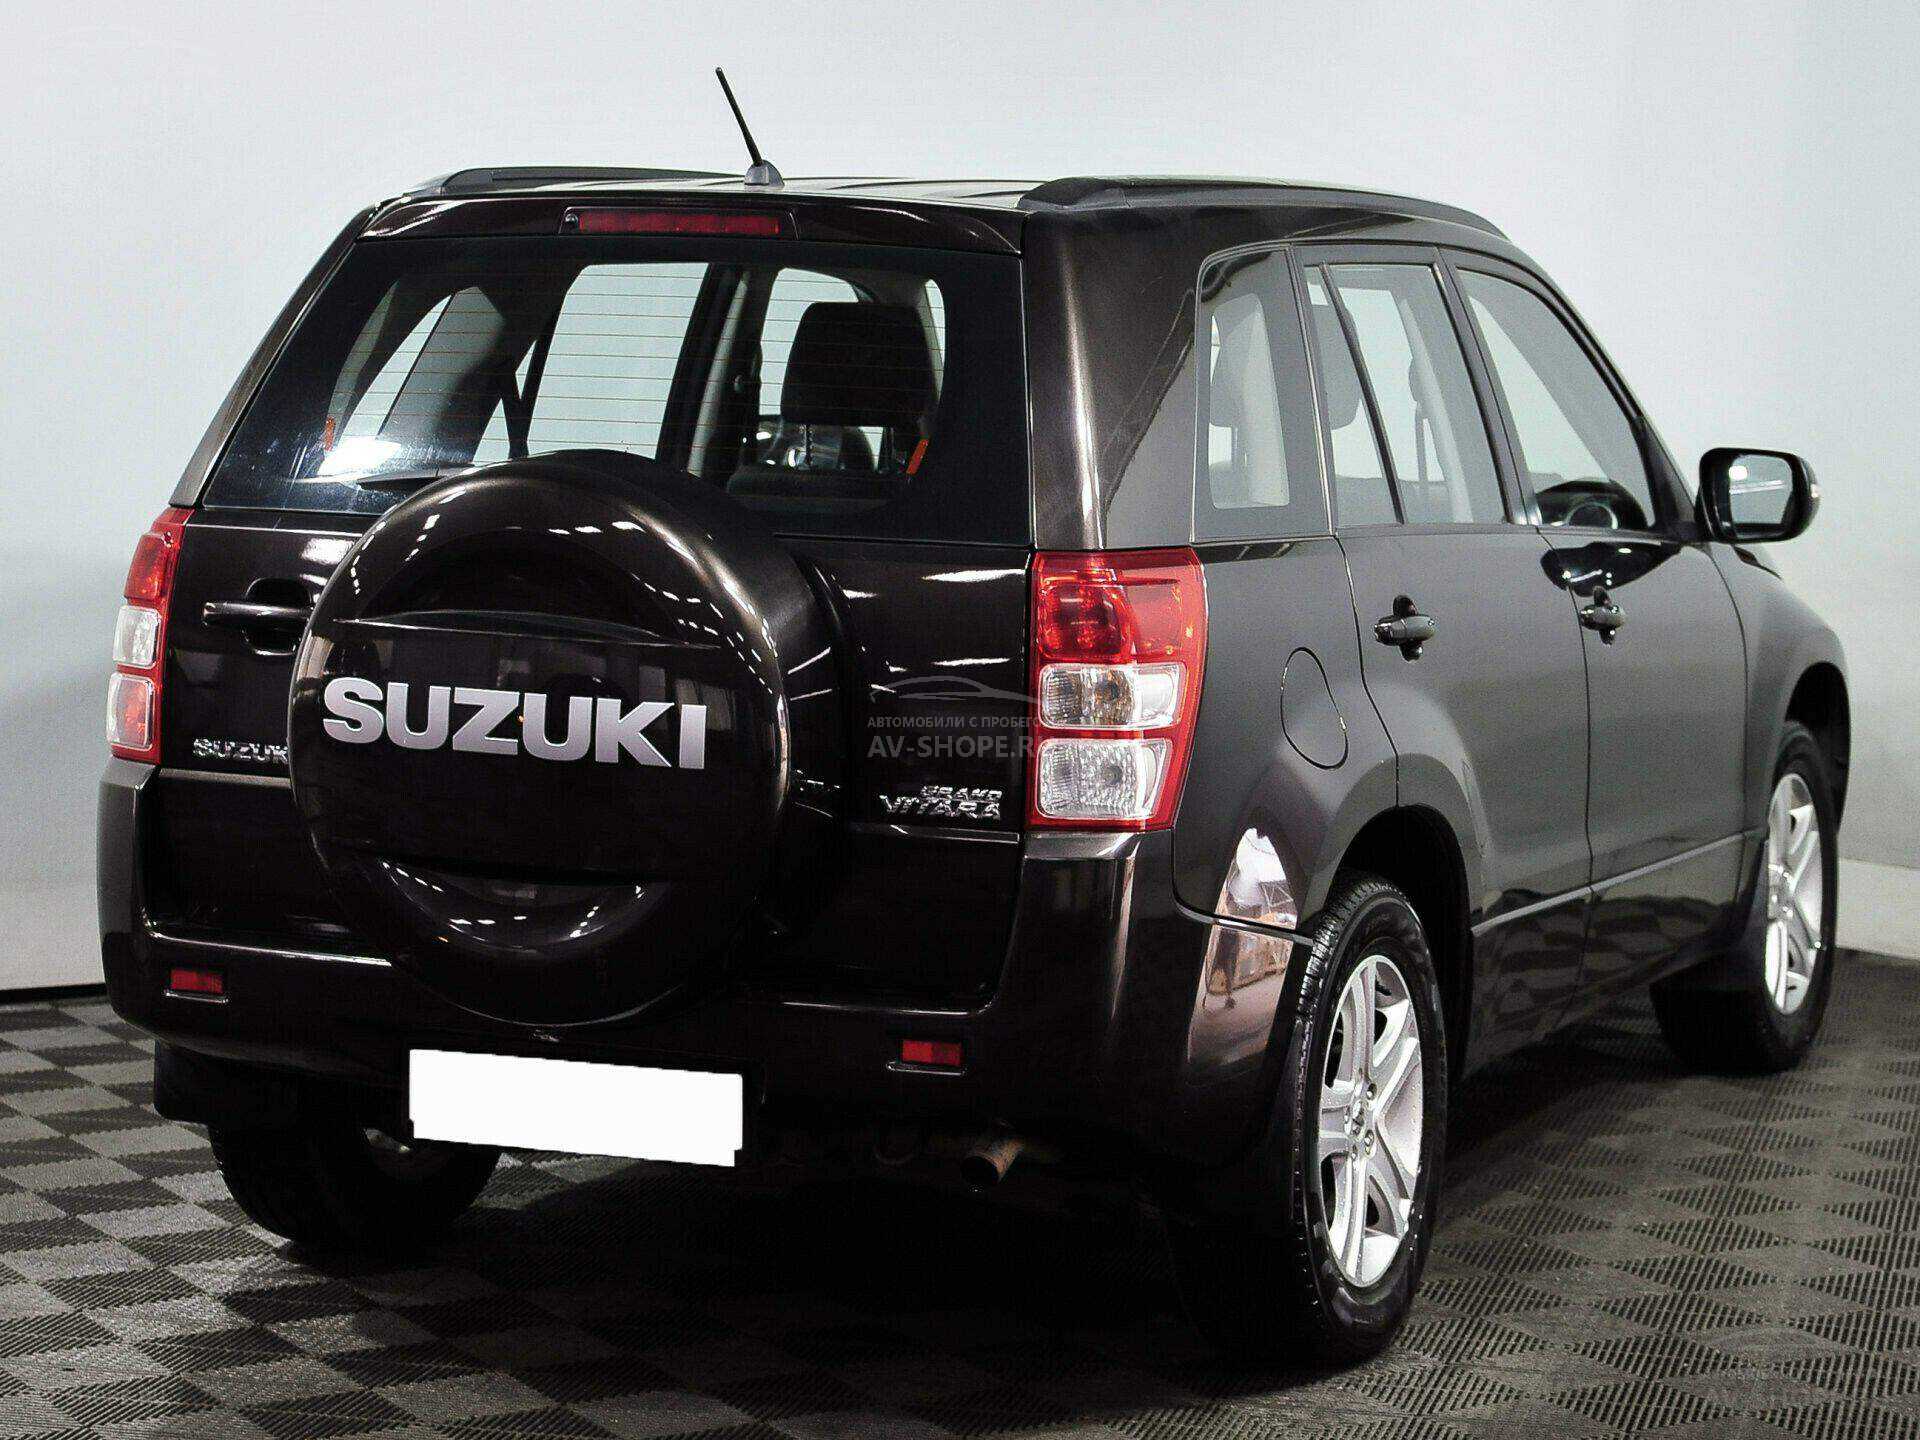 Vitara 2014. Судзуки Гранд Витара 2014г. Grand Vitara 2014. Suzuki Grand Vitara 2014. Suzuki Grand Vitara 140 л.с.